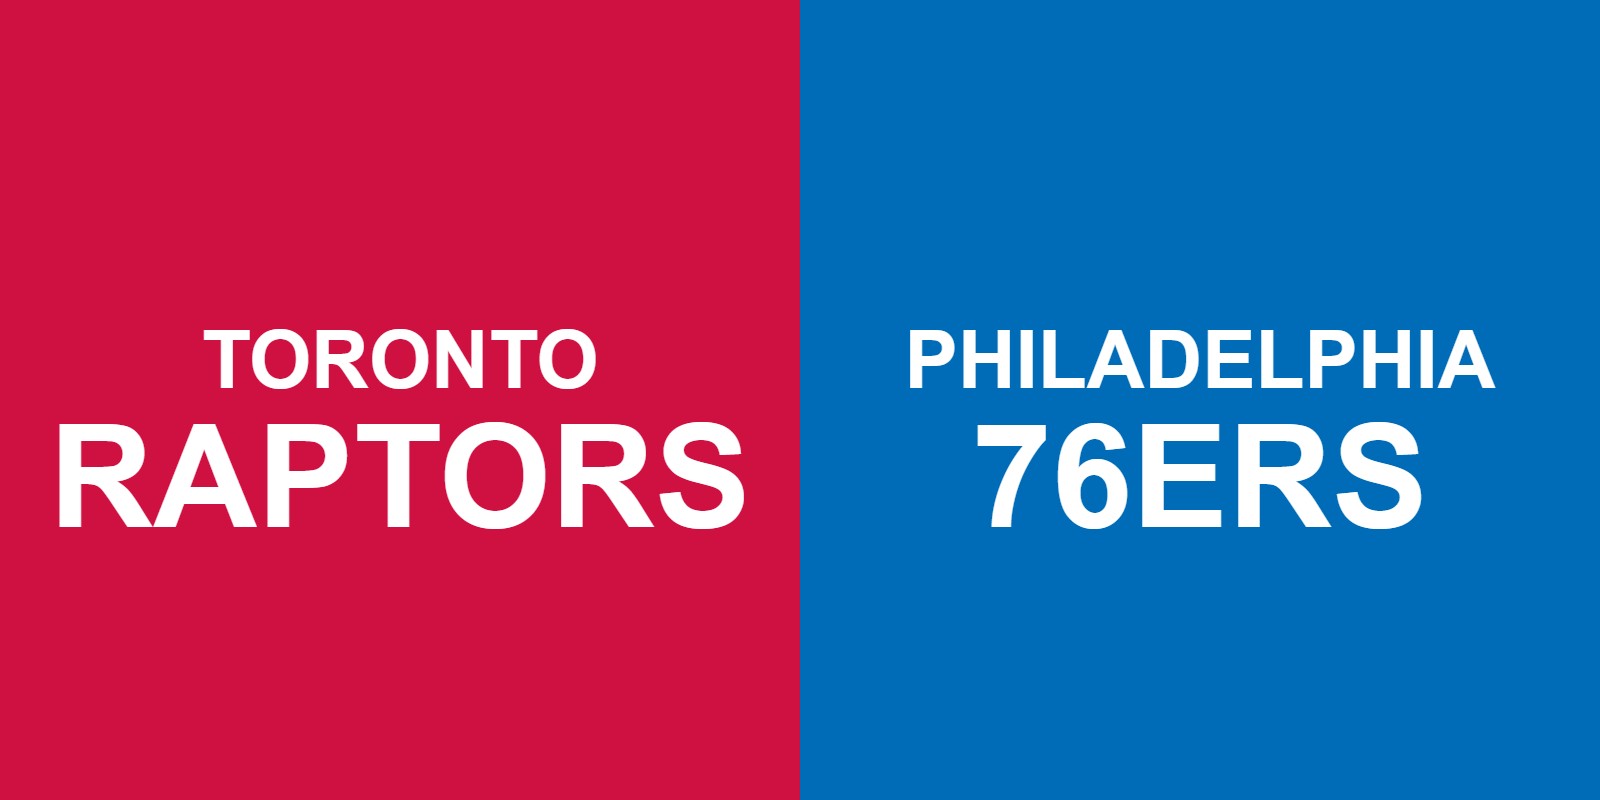 Raptors vs 76ers